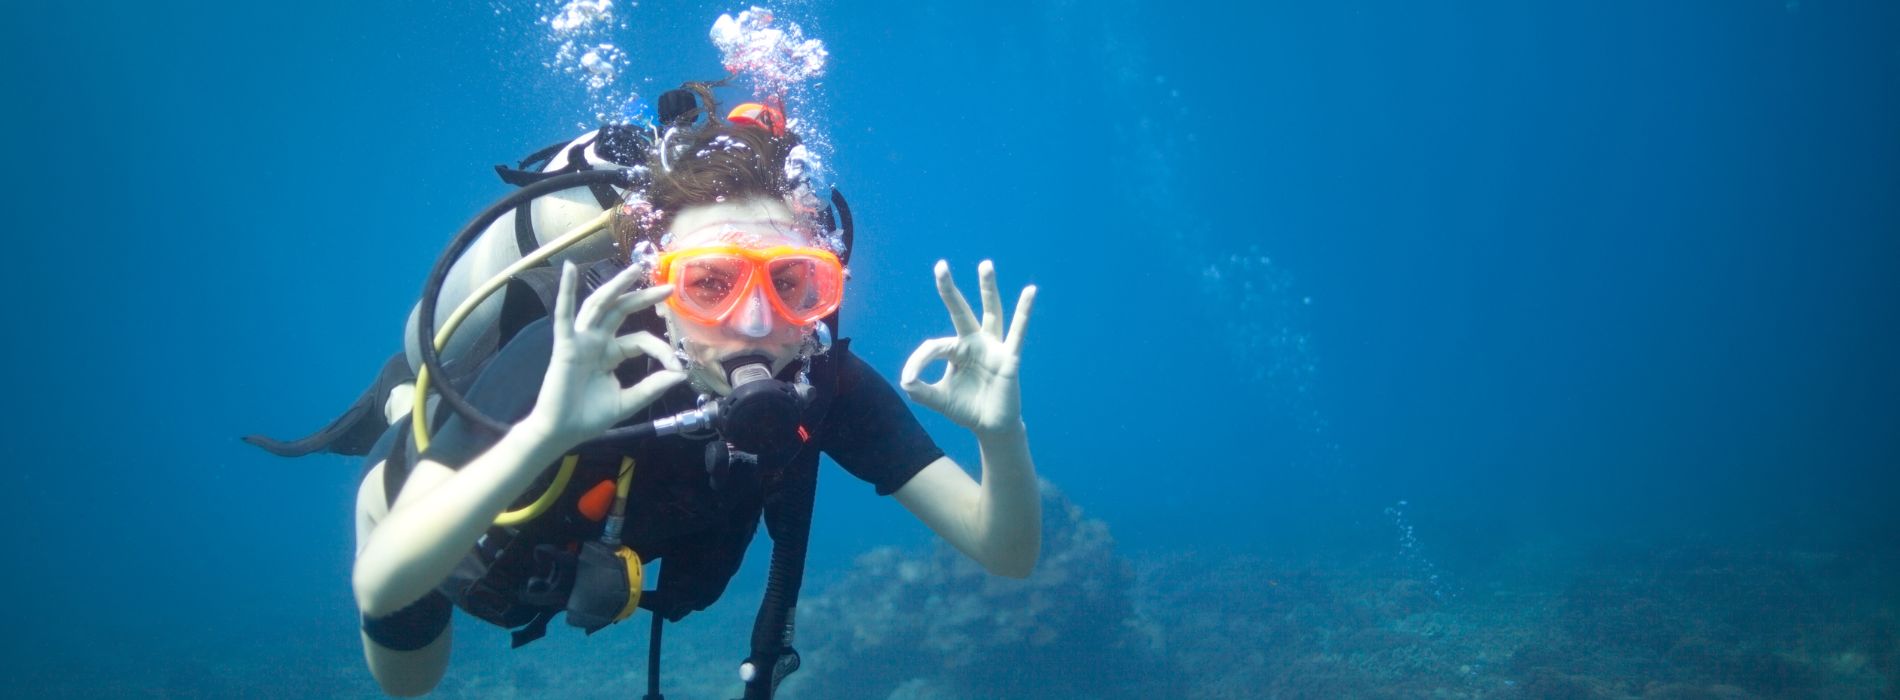 Best Place to Scuba Dive in Kauai